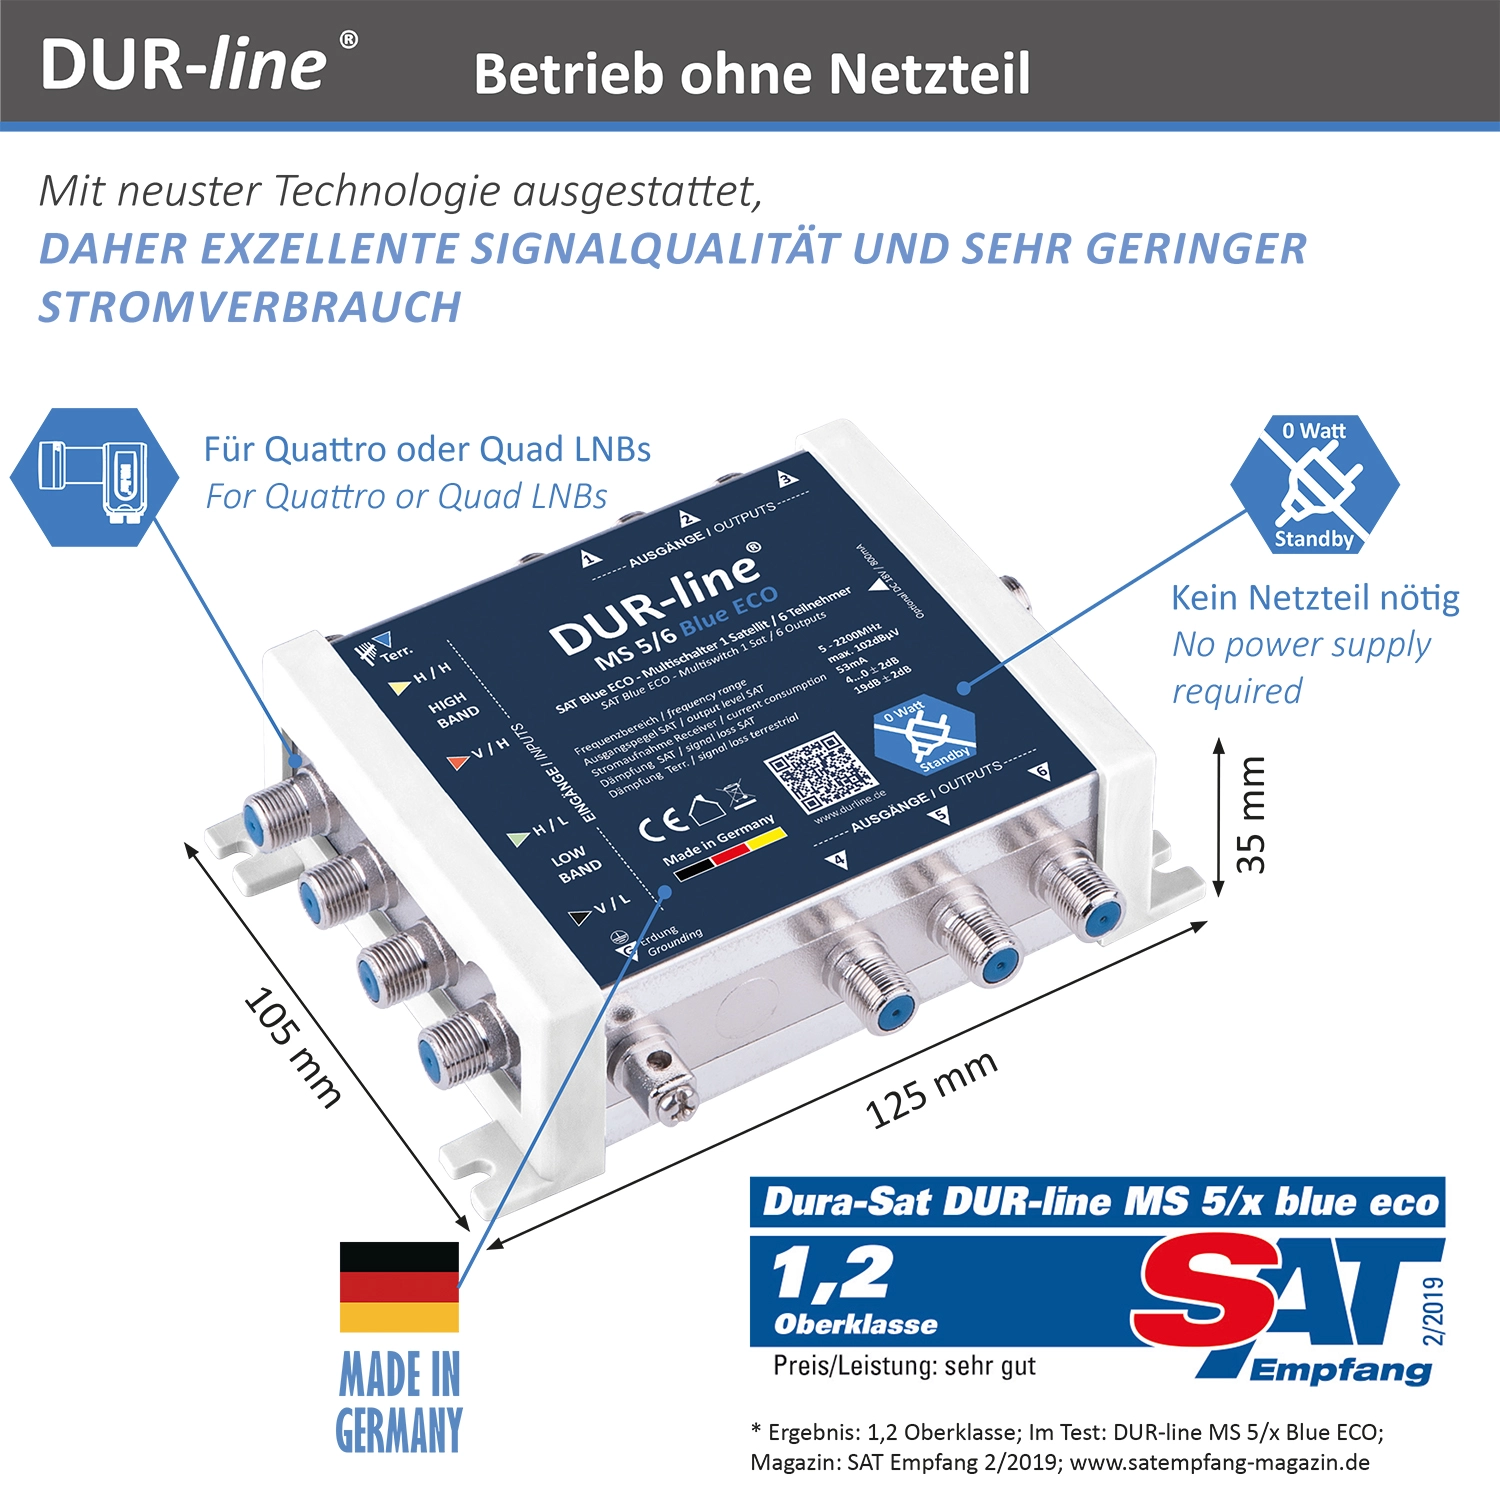 DUR-line MS 5/6 blue eco - Multischalter